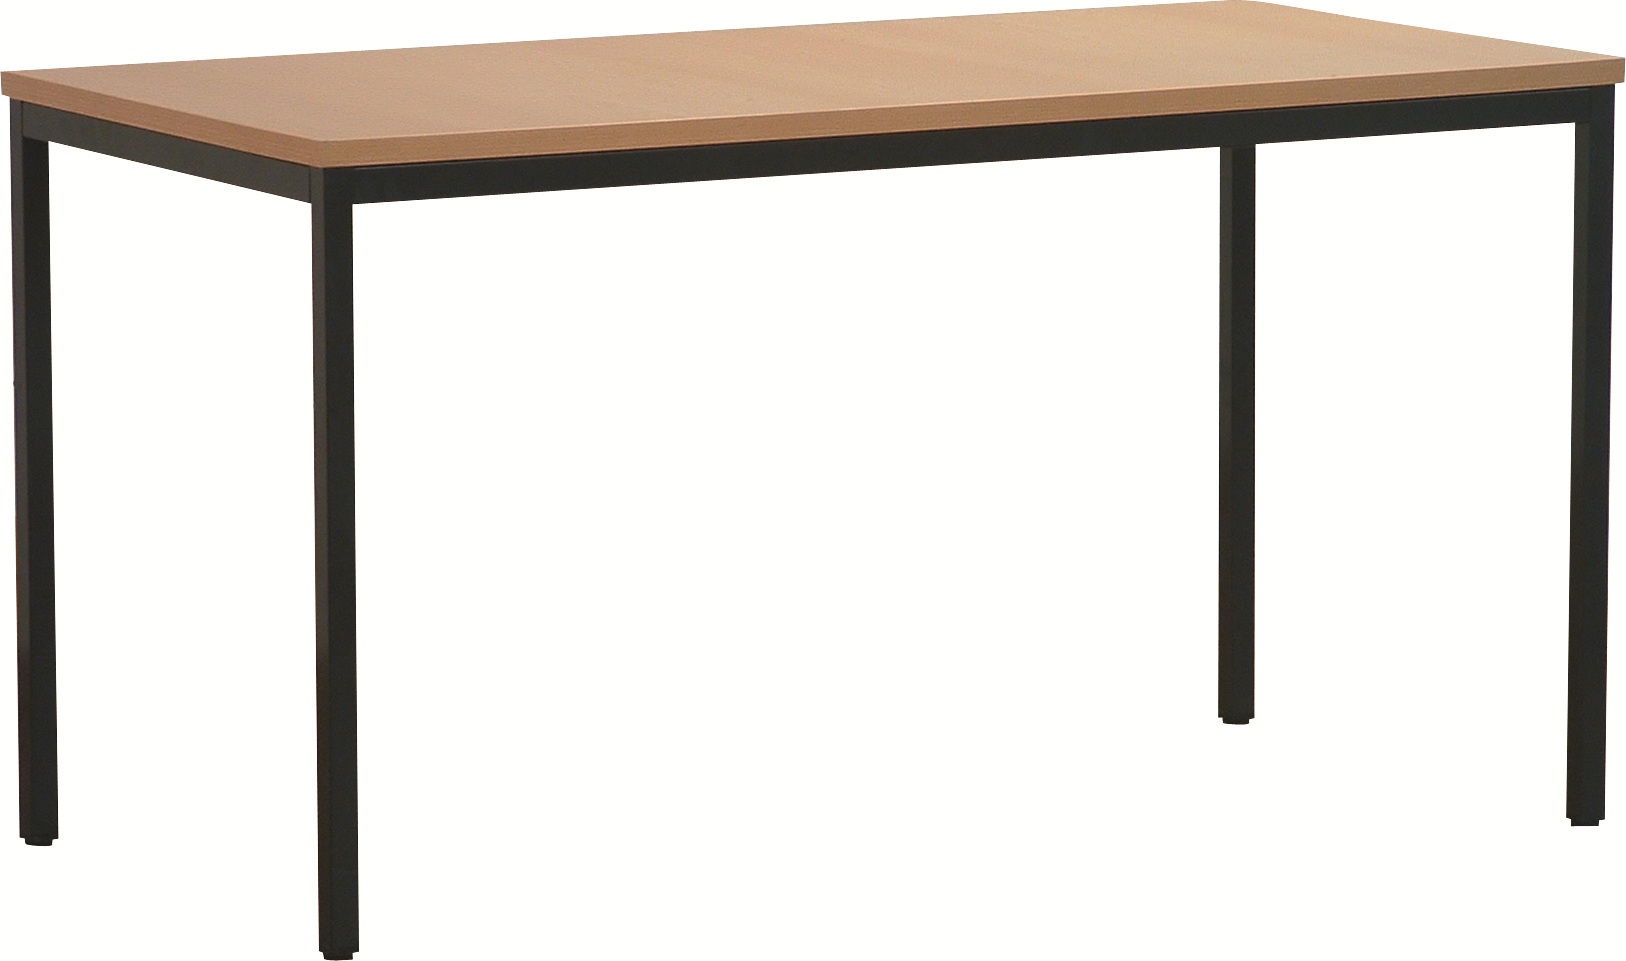 Dankzegging honderd dubbellaag Simpli multifunctionele tafel 120x60 cm | Eska office